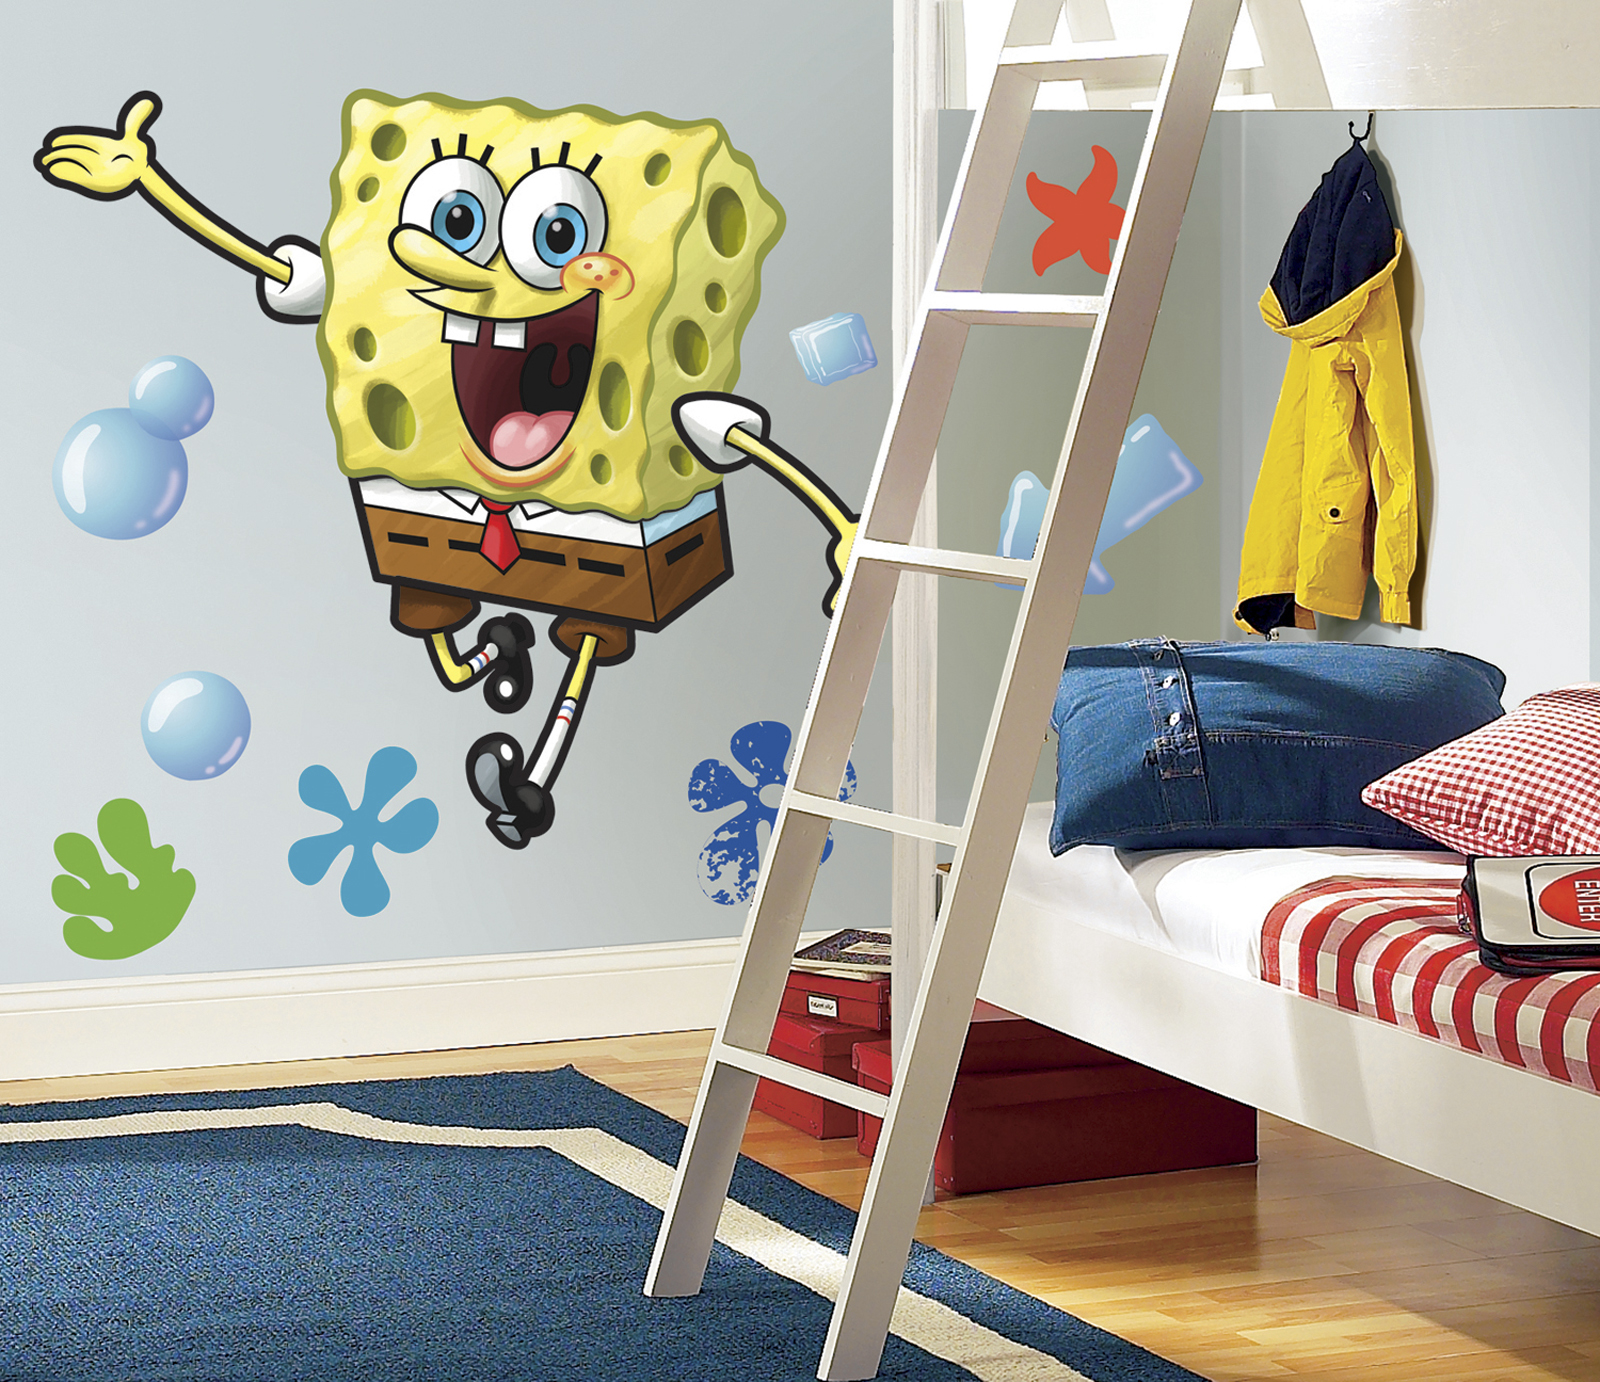 RoomMates Spongebob Squarepants Peel & Stick Giant Wall Decals   Home